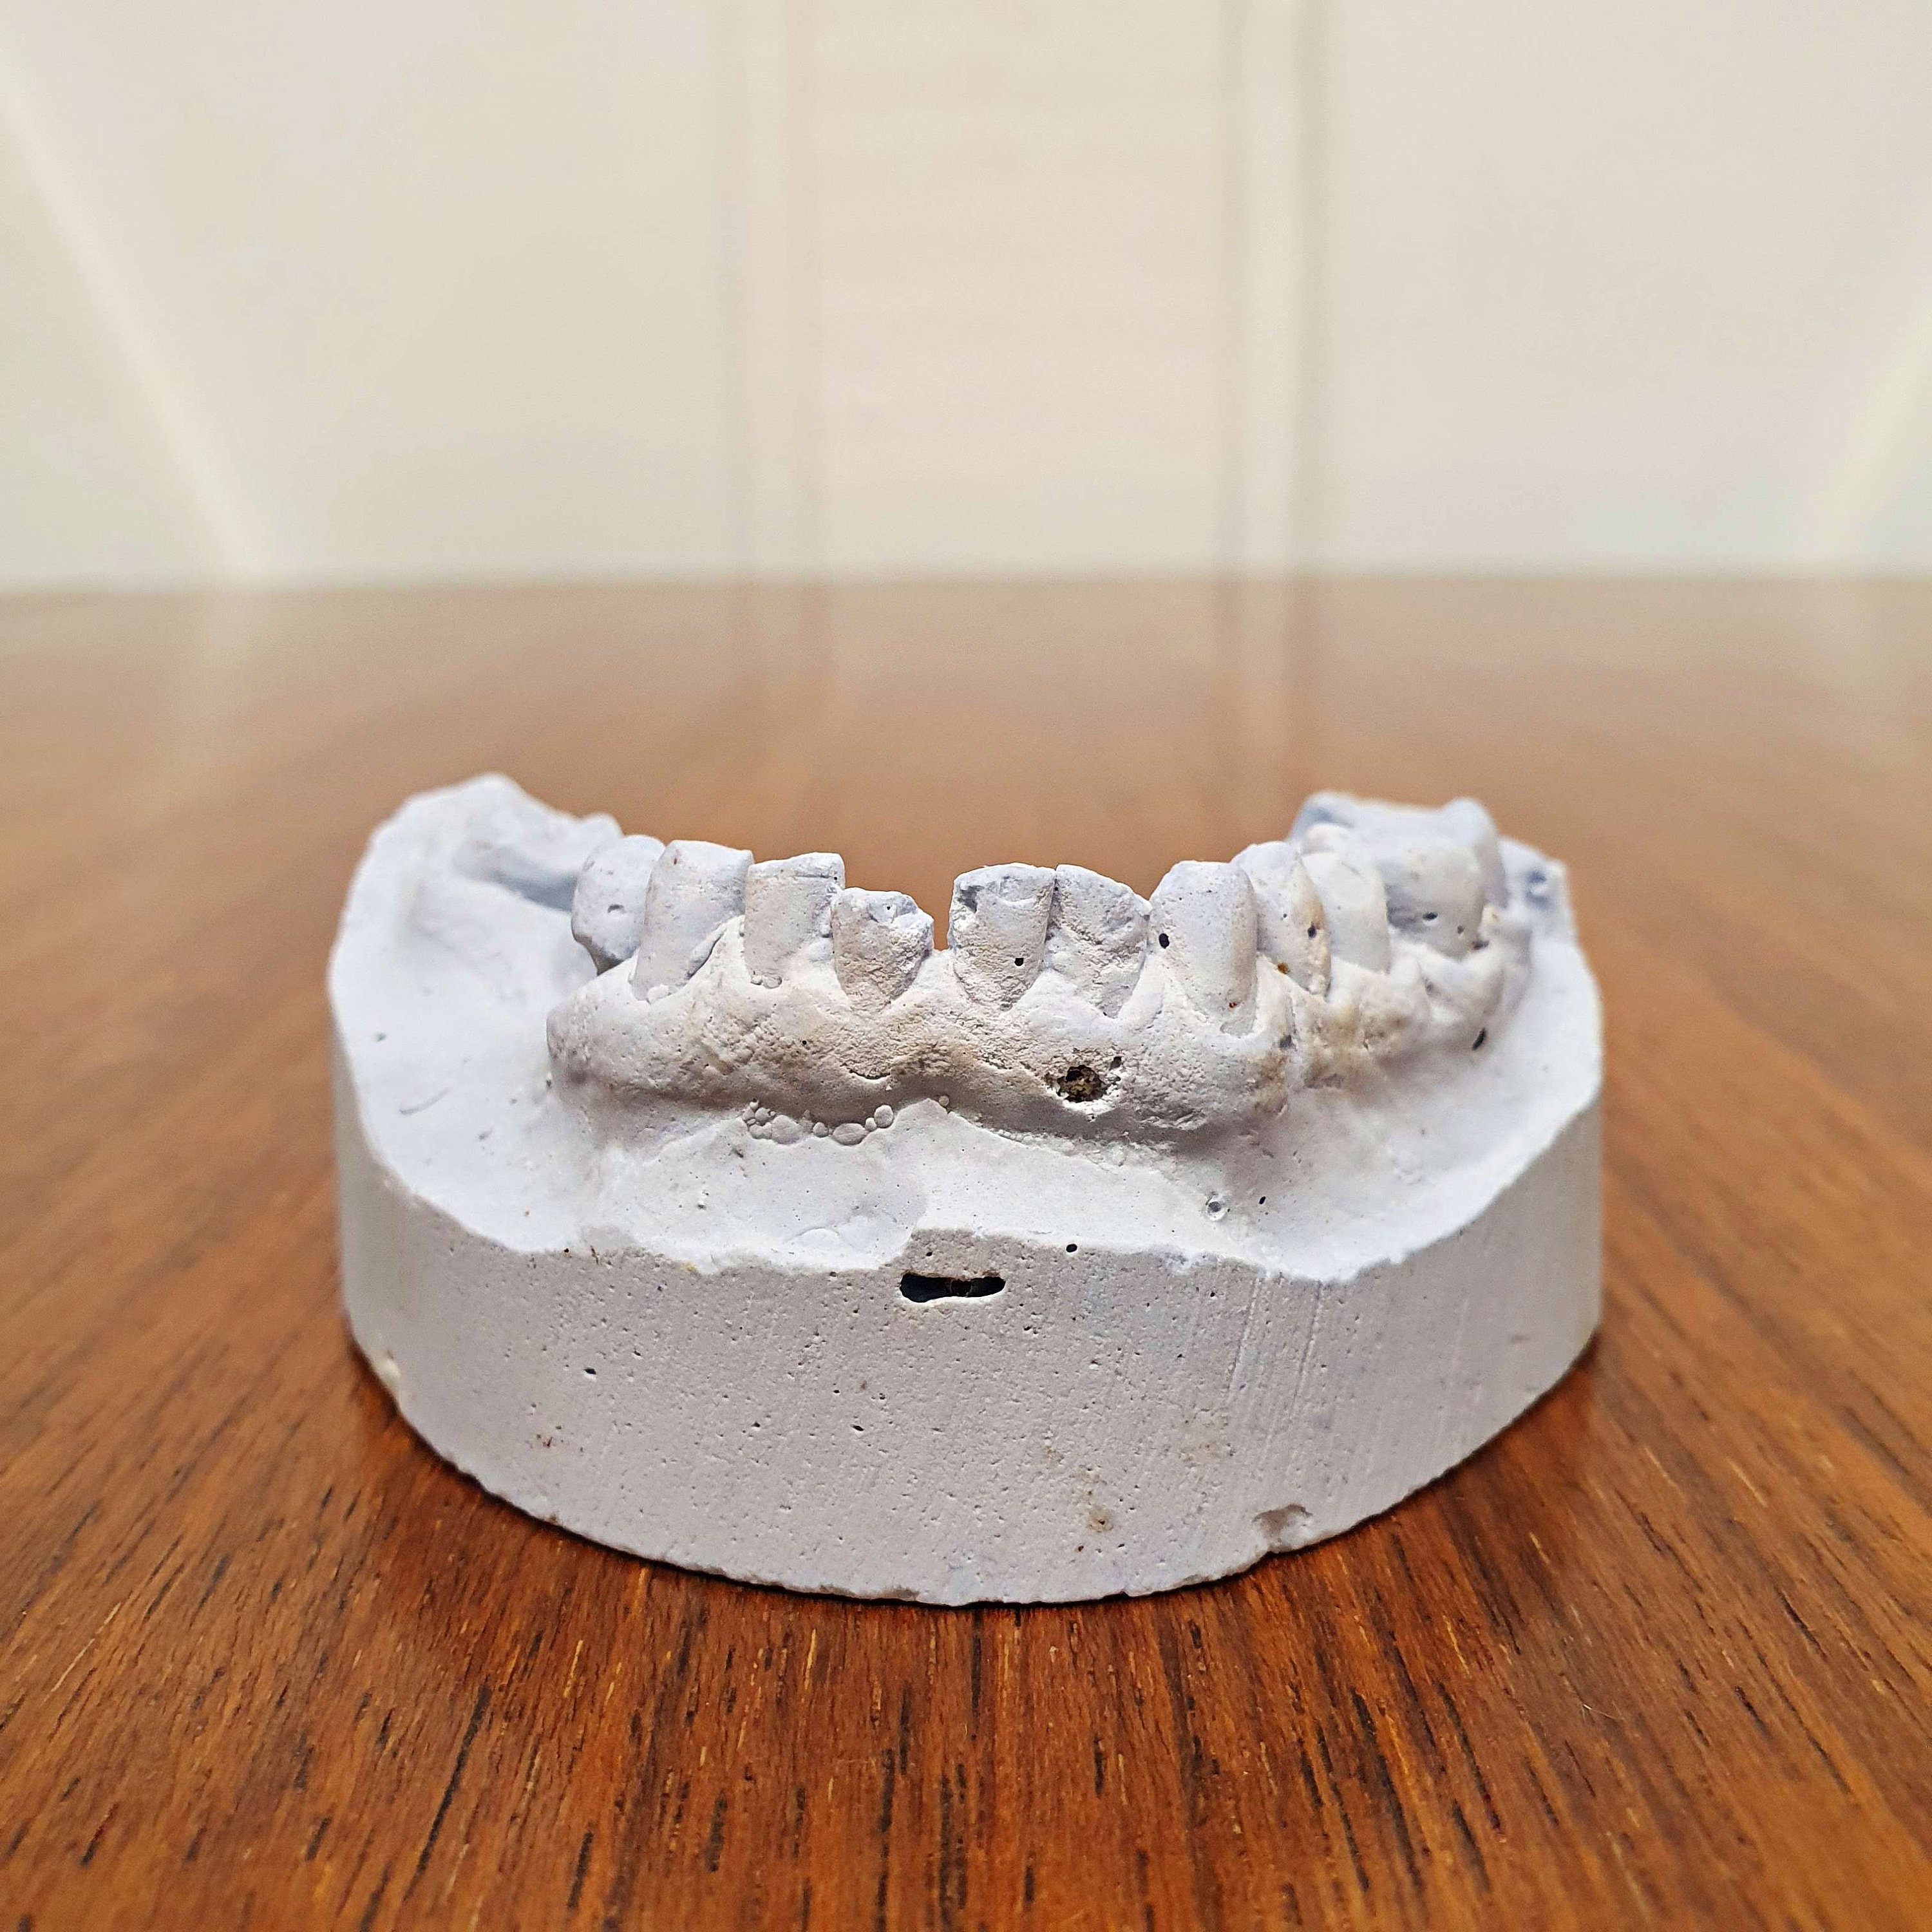  Molde de material de impresión de moldes de base anterior  modelo de yeso de silicona dental 6pcs : Industrial y Científico